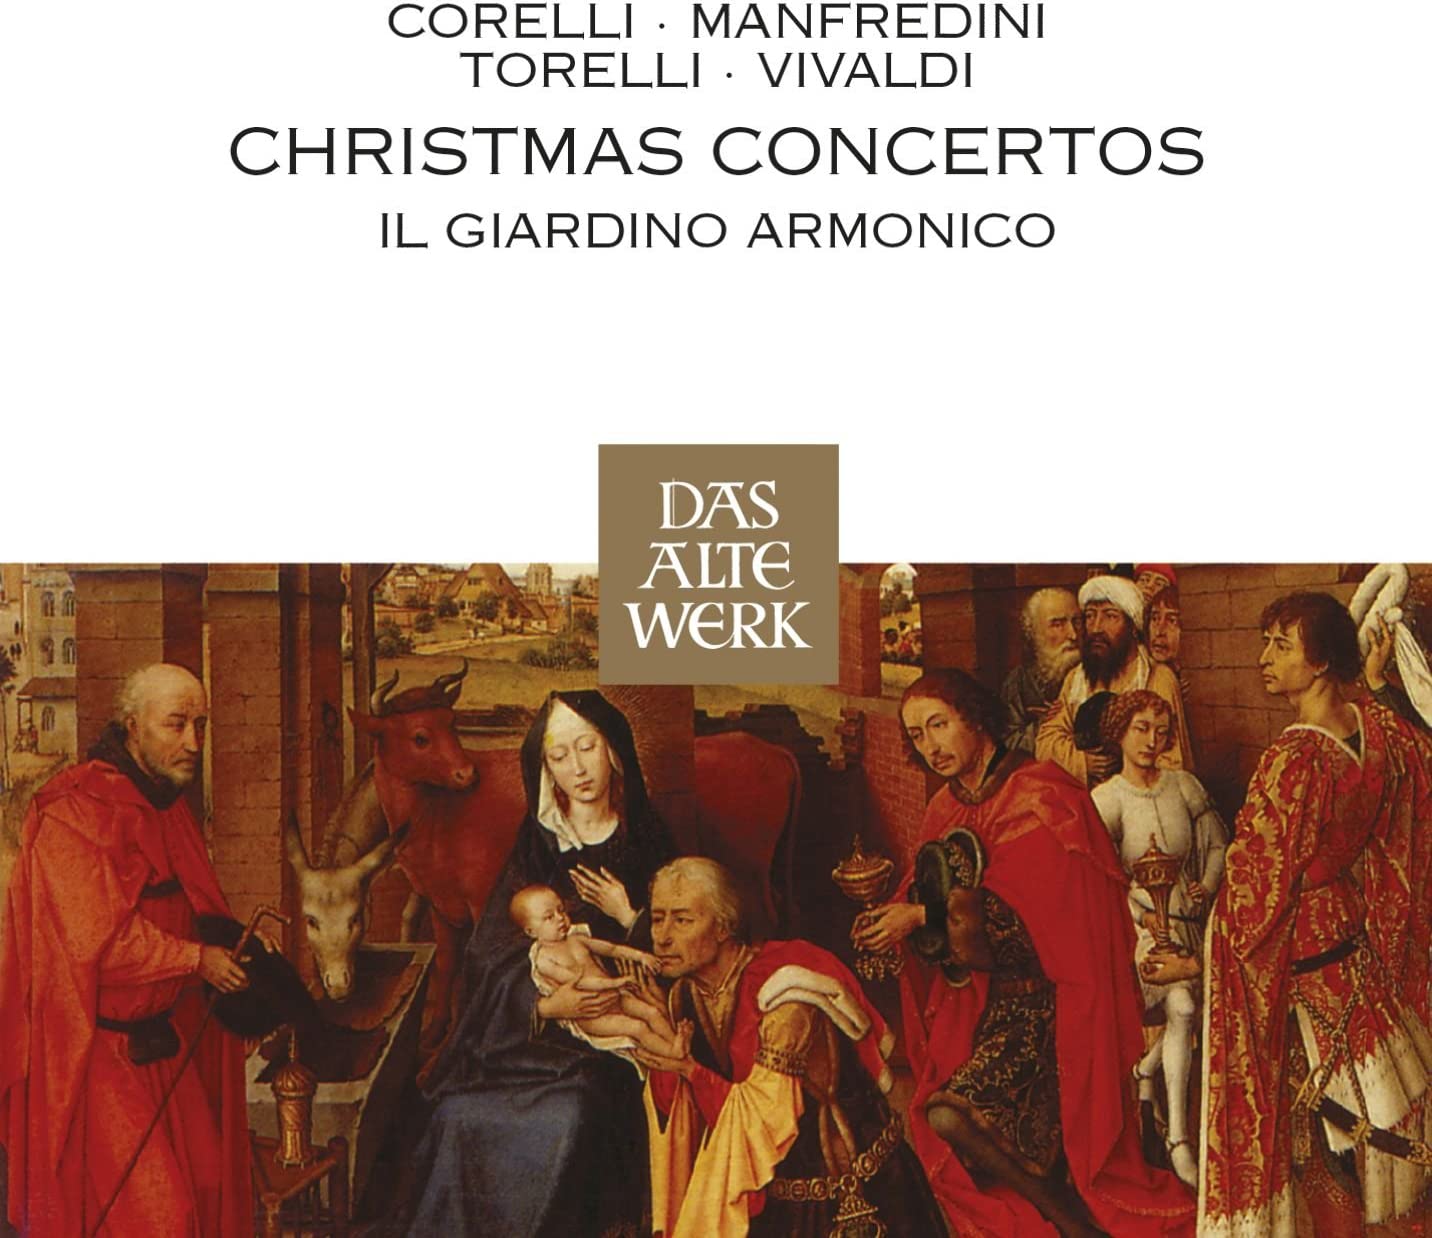 Christmas Collection | Antonio Vivaldi, Corelli, Manfredini, Torelli